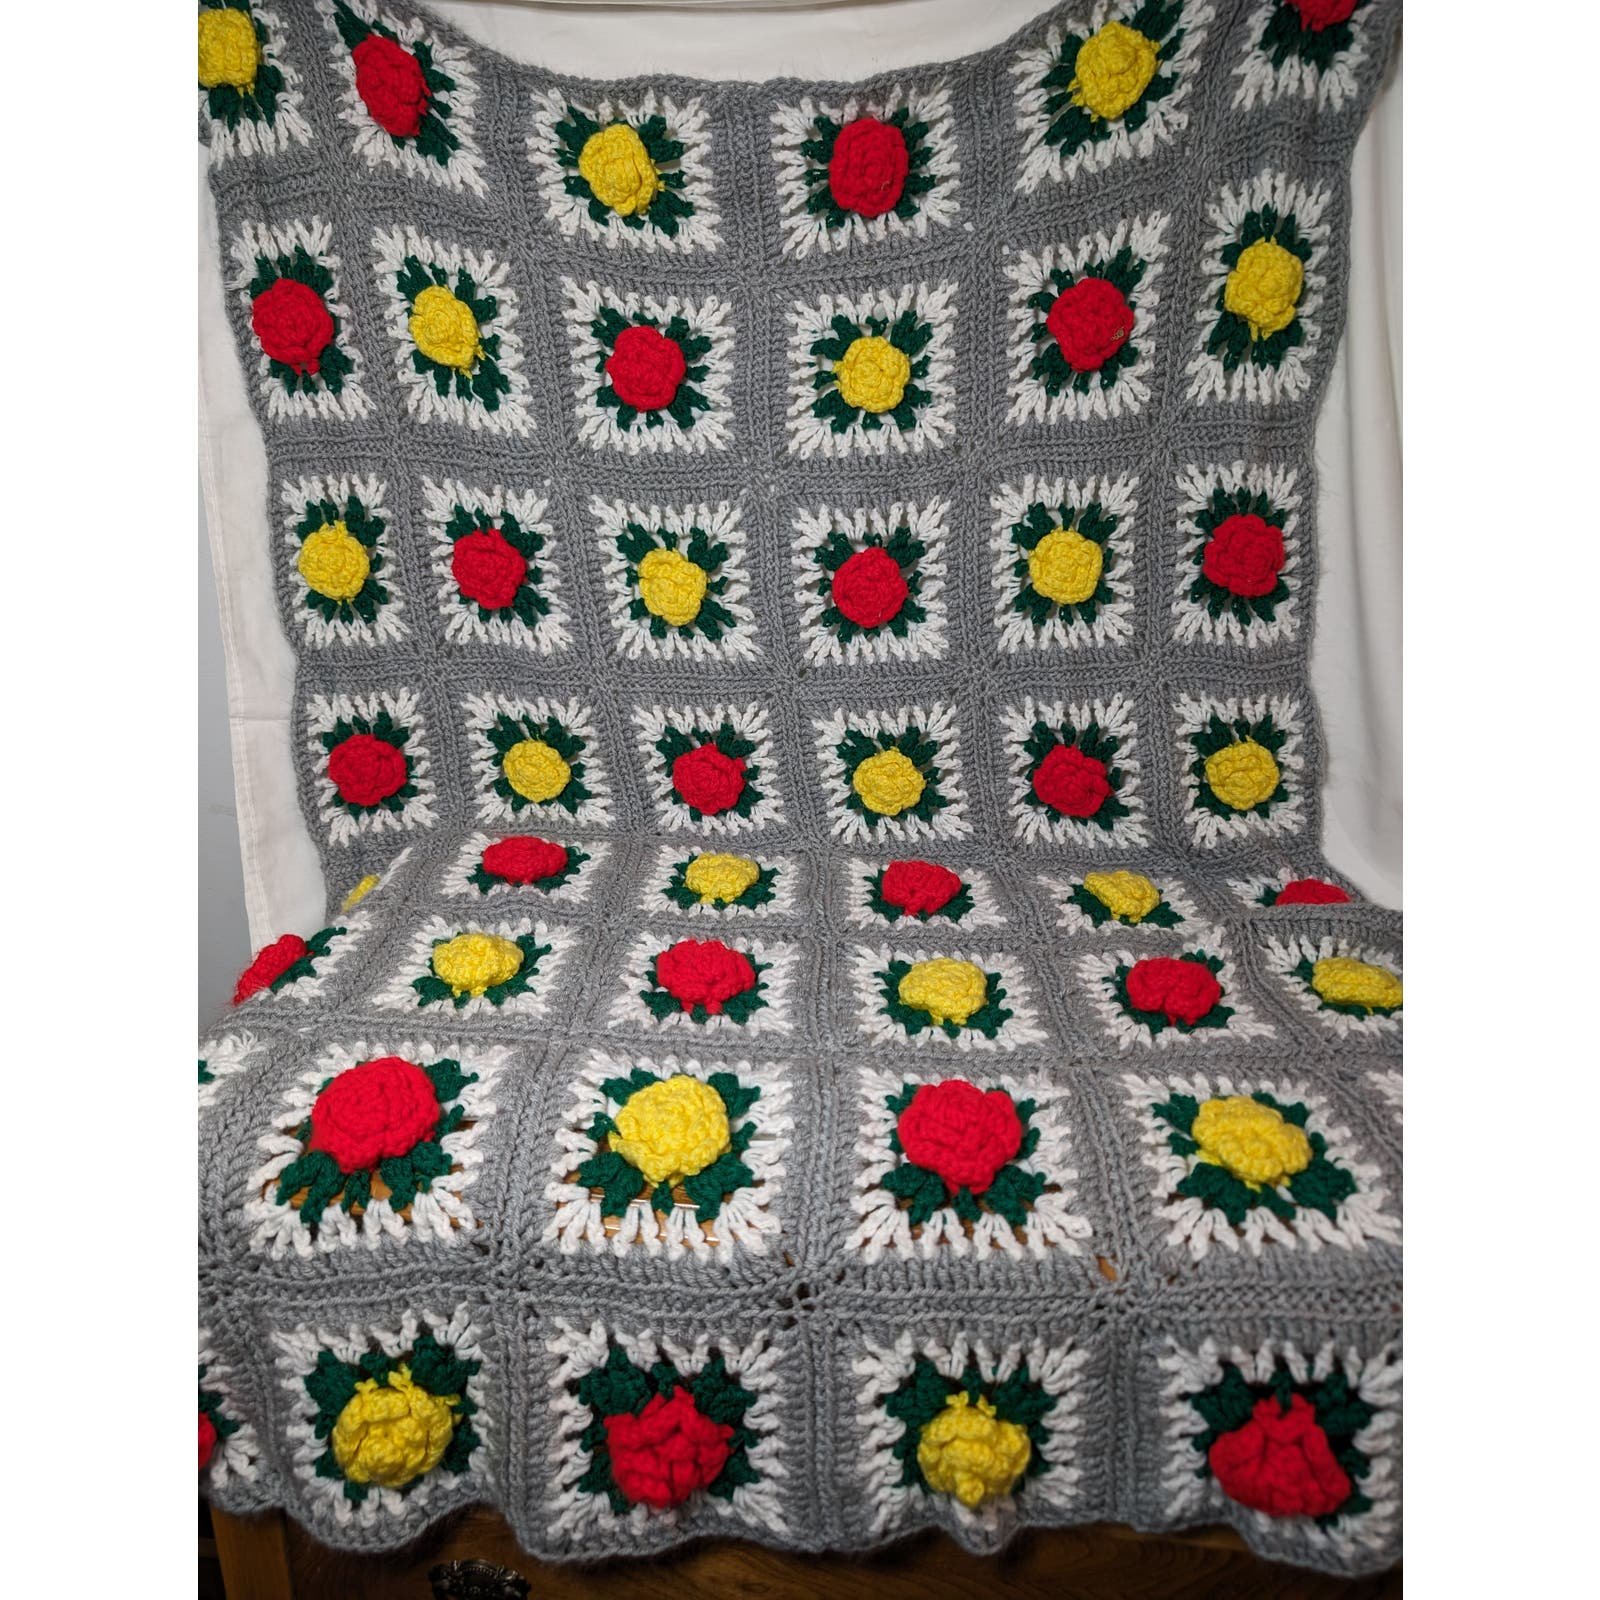 Vintage Rose 3D Crochet Blanket Small 36x46 DBn2qlKDX